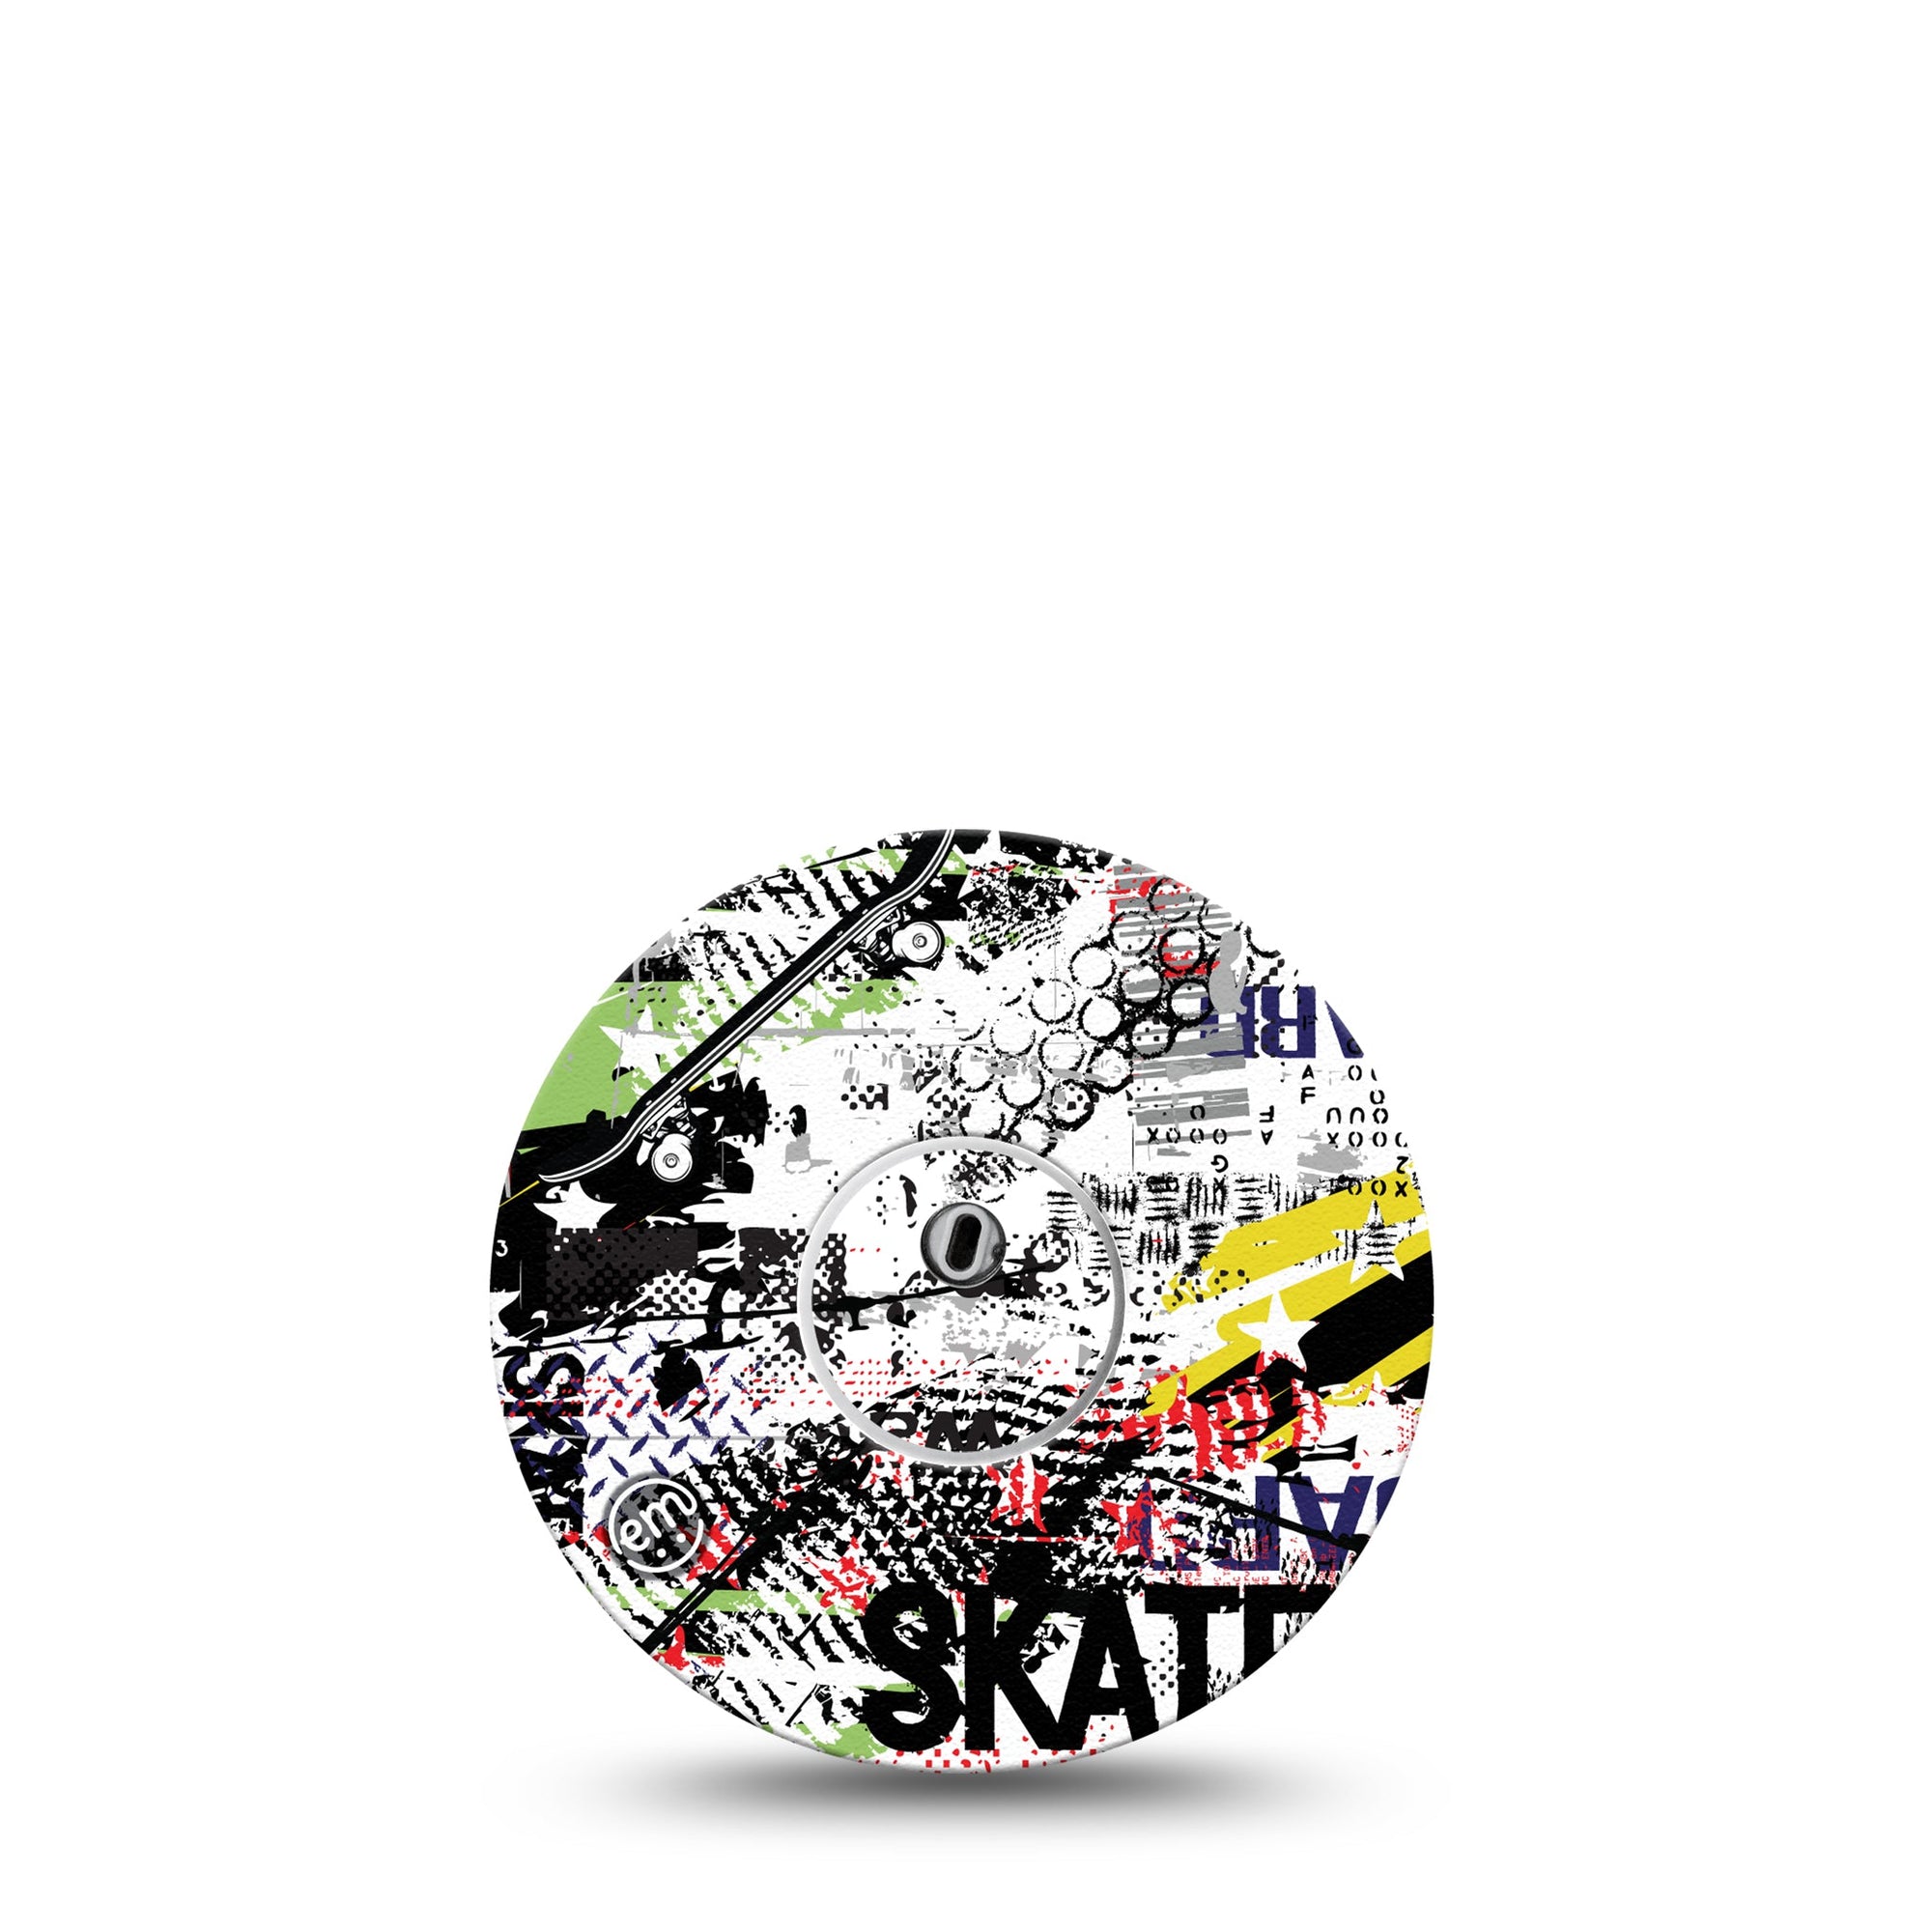 ExpressionMed Skateboard Freestyle Libre 3 Transmitter Sticker and Tape, Skate Fun, CGM Vinyl Sticker Design